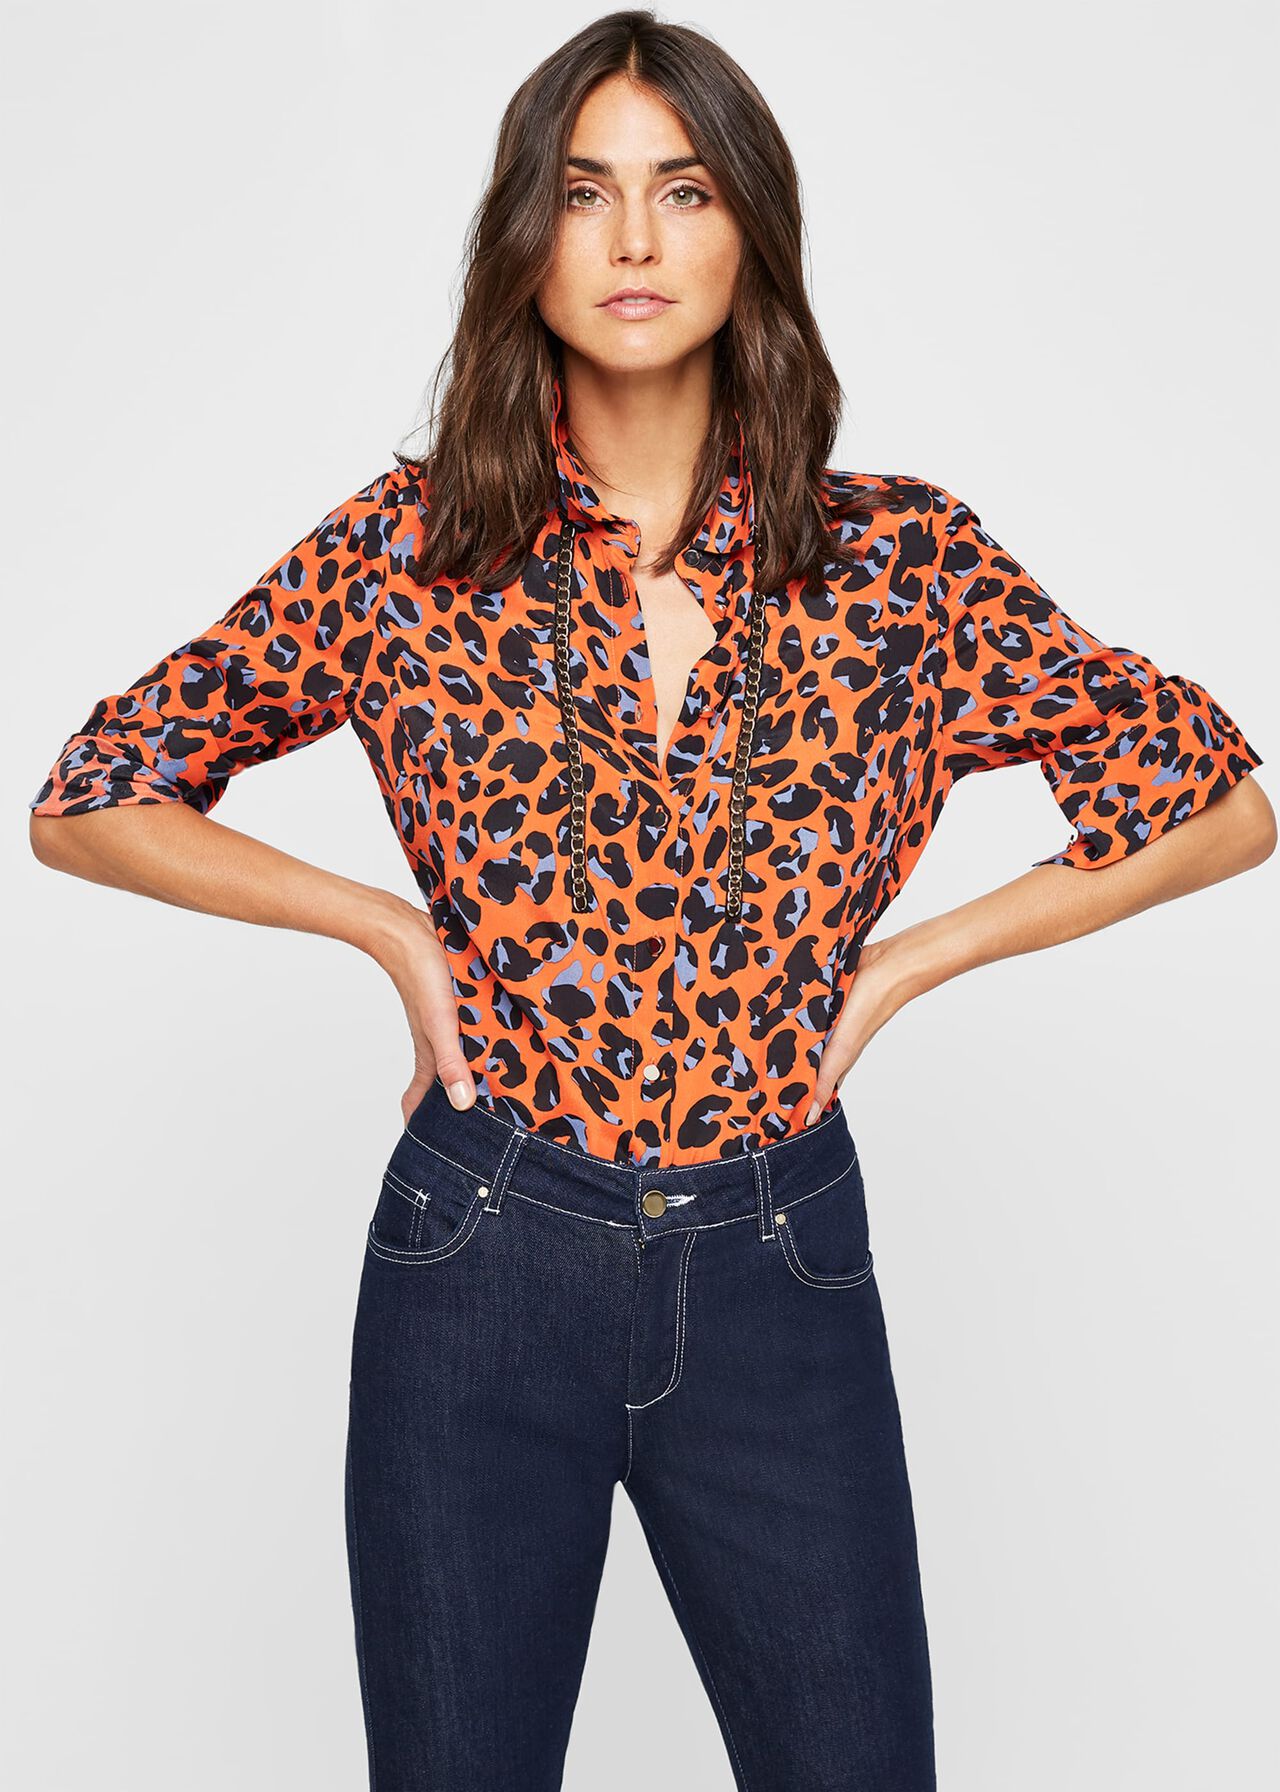 Hena Leopard Chain Shirt